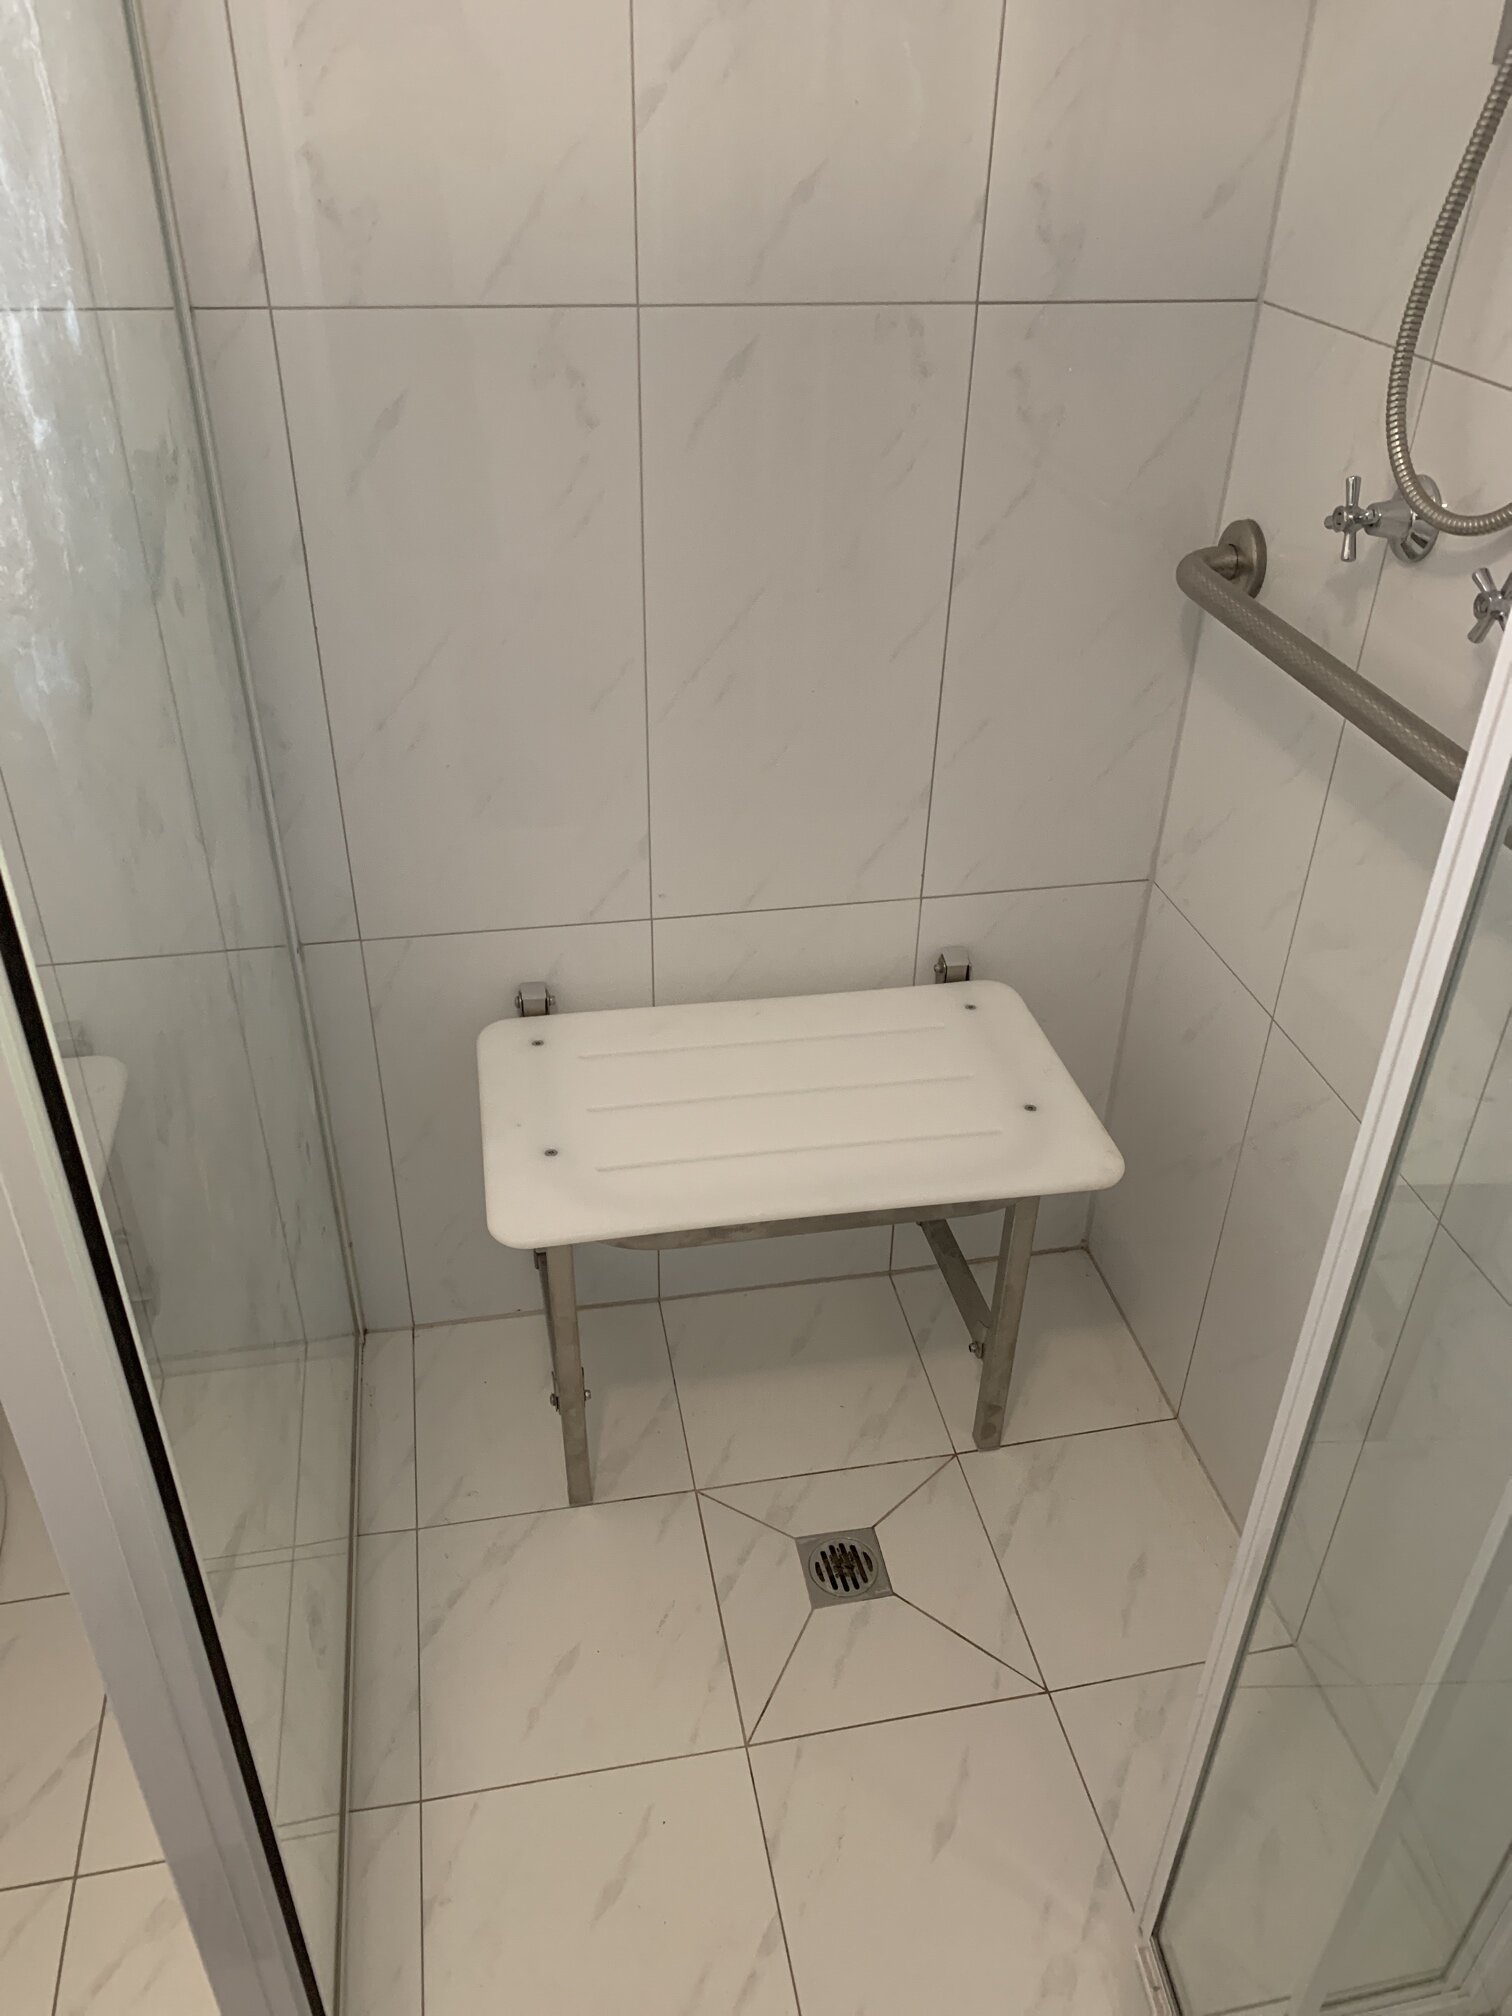 shower seat.jpg